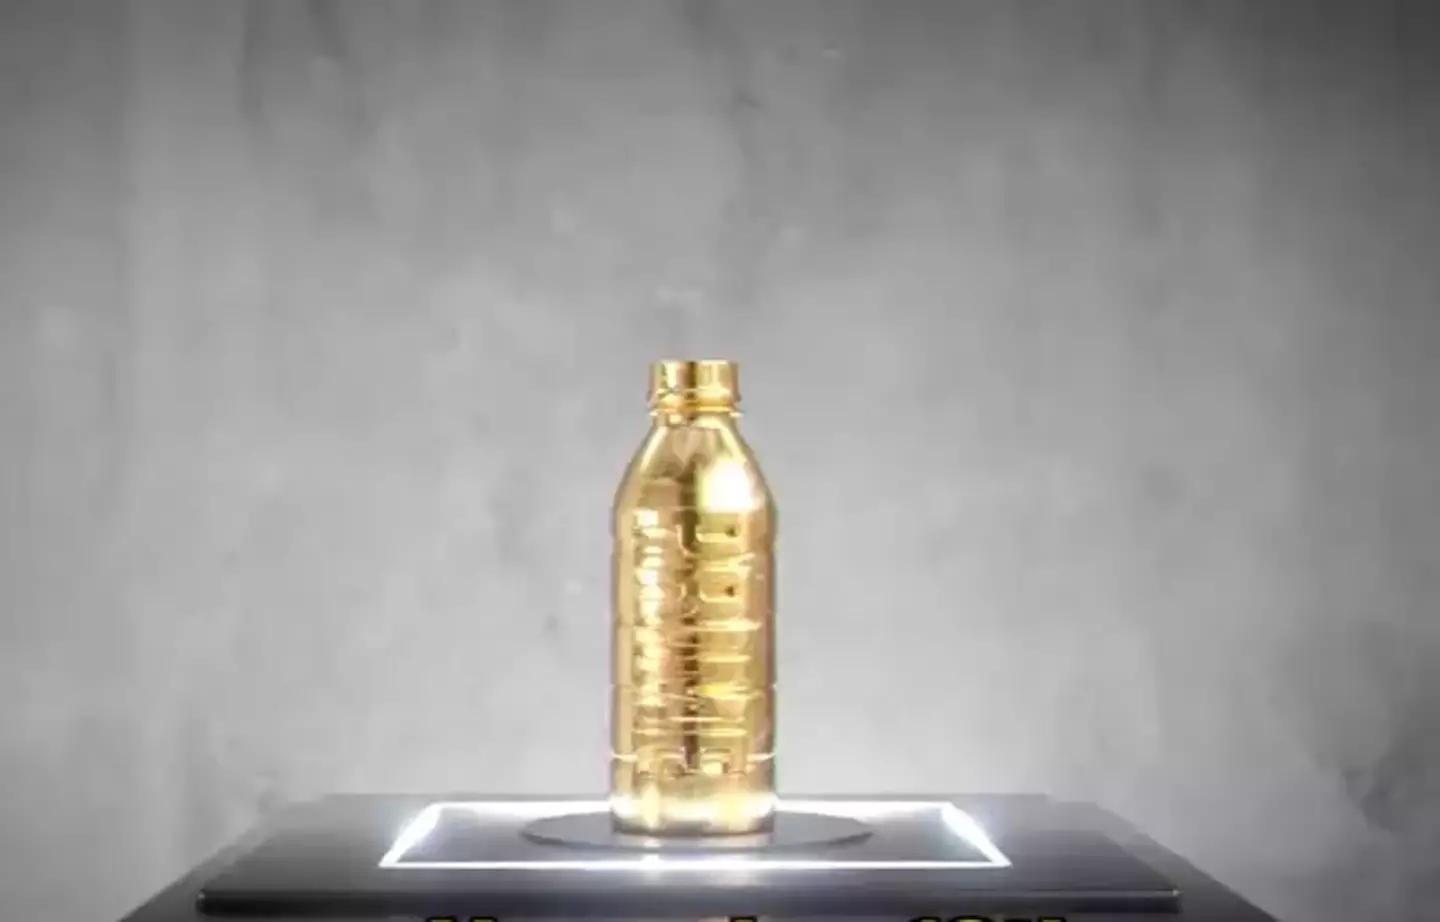 The special golden bottle.